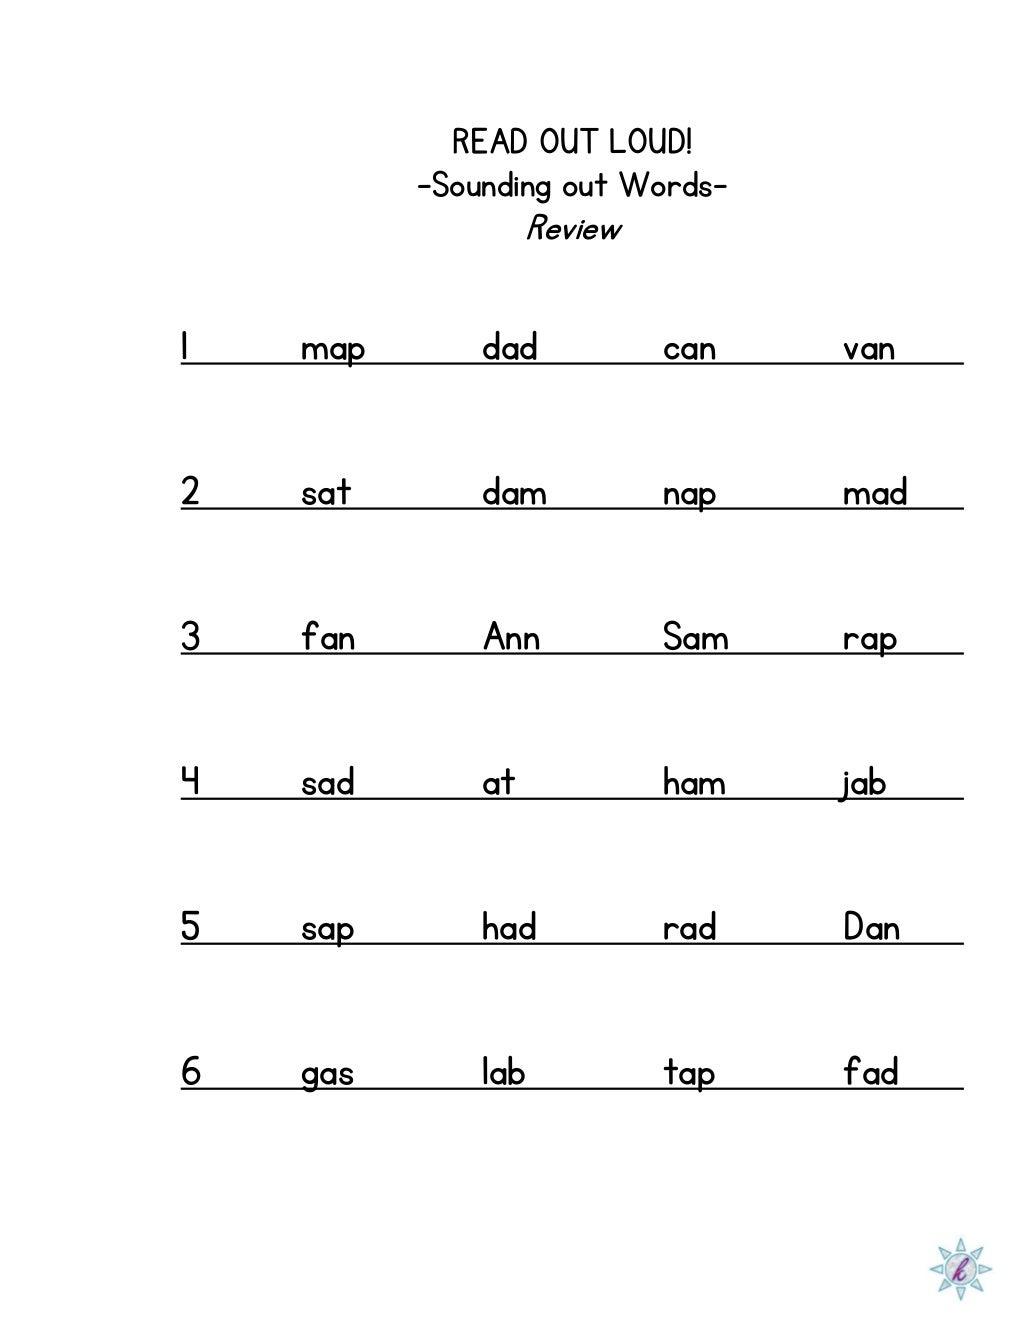 dyslexia-worksheets-for-kindergarten